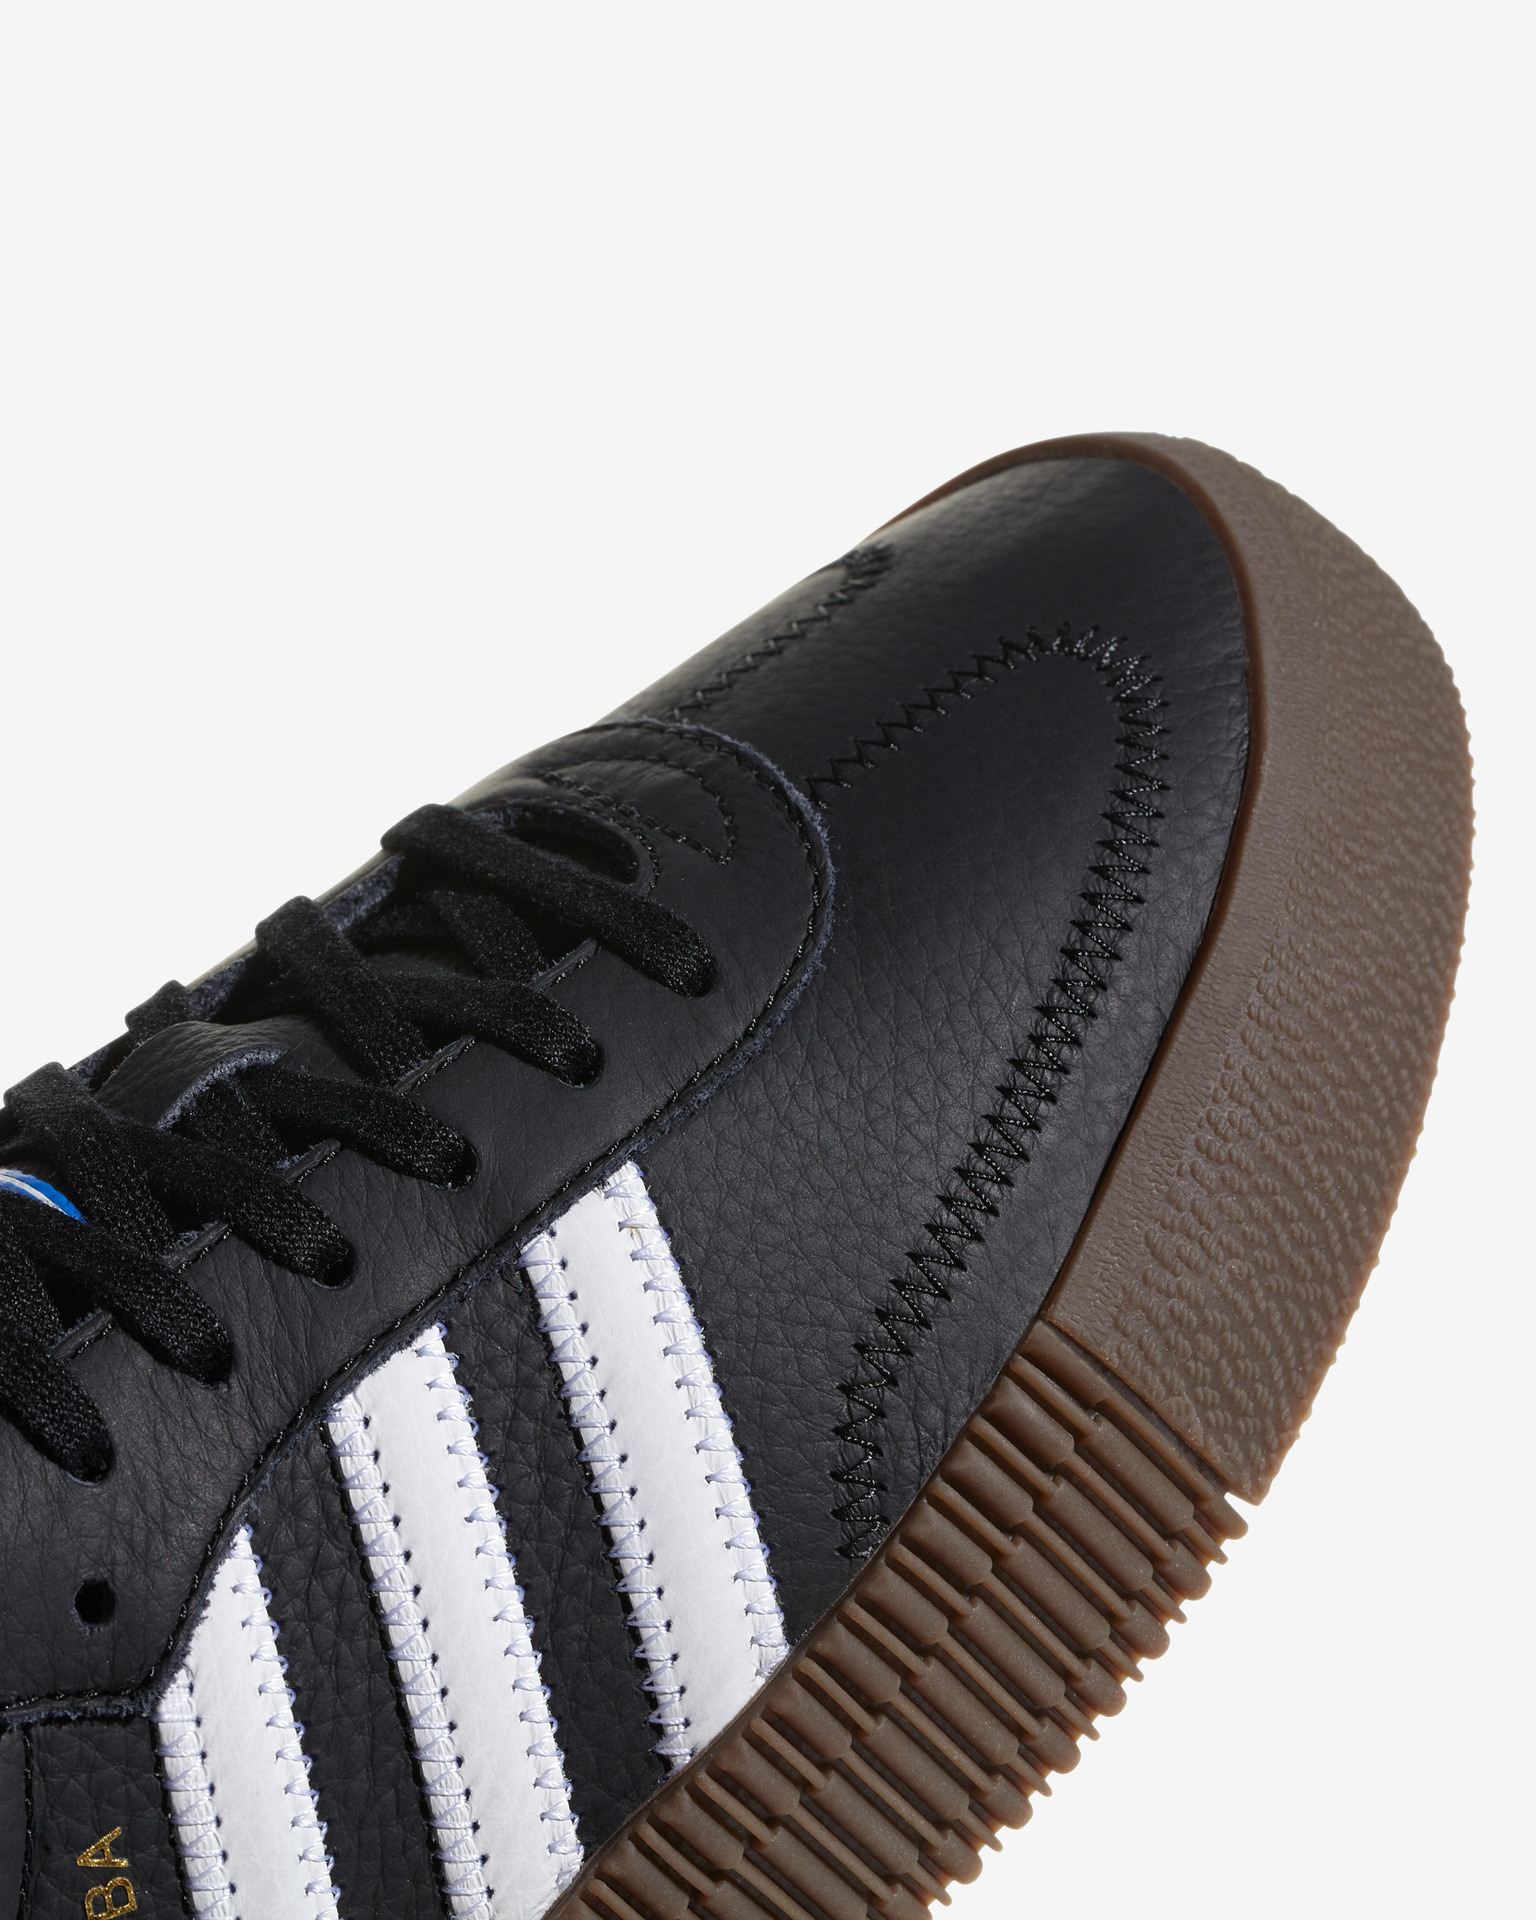 Buy Adidas Women's Sambarose W Sofvis/Ftwwht/Gum2 Sneakers - 4 UK (36 2/3  EU) (5.5 US) (CG6205) at Amazon.in